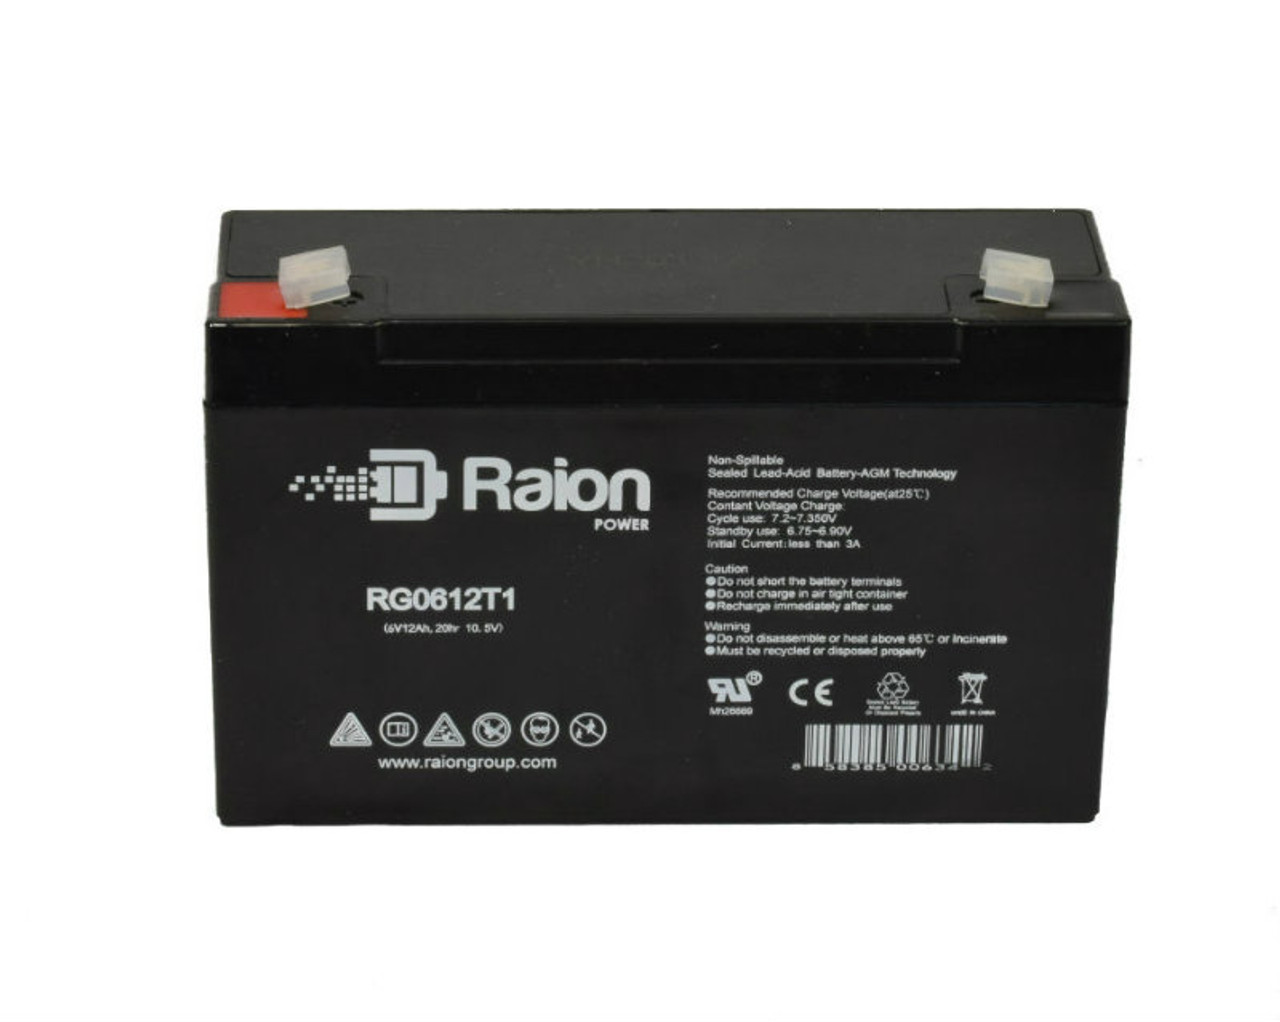 Raion Power RG06120T1 SLA Battery for Big Beam 2CL6S20